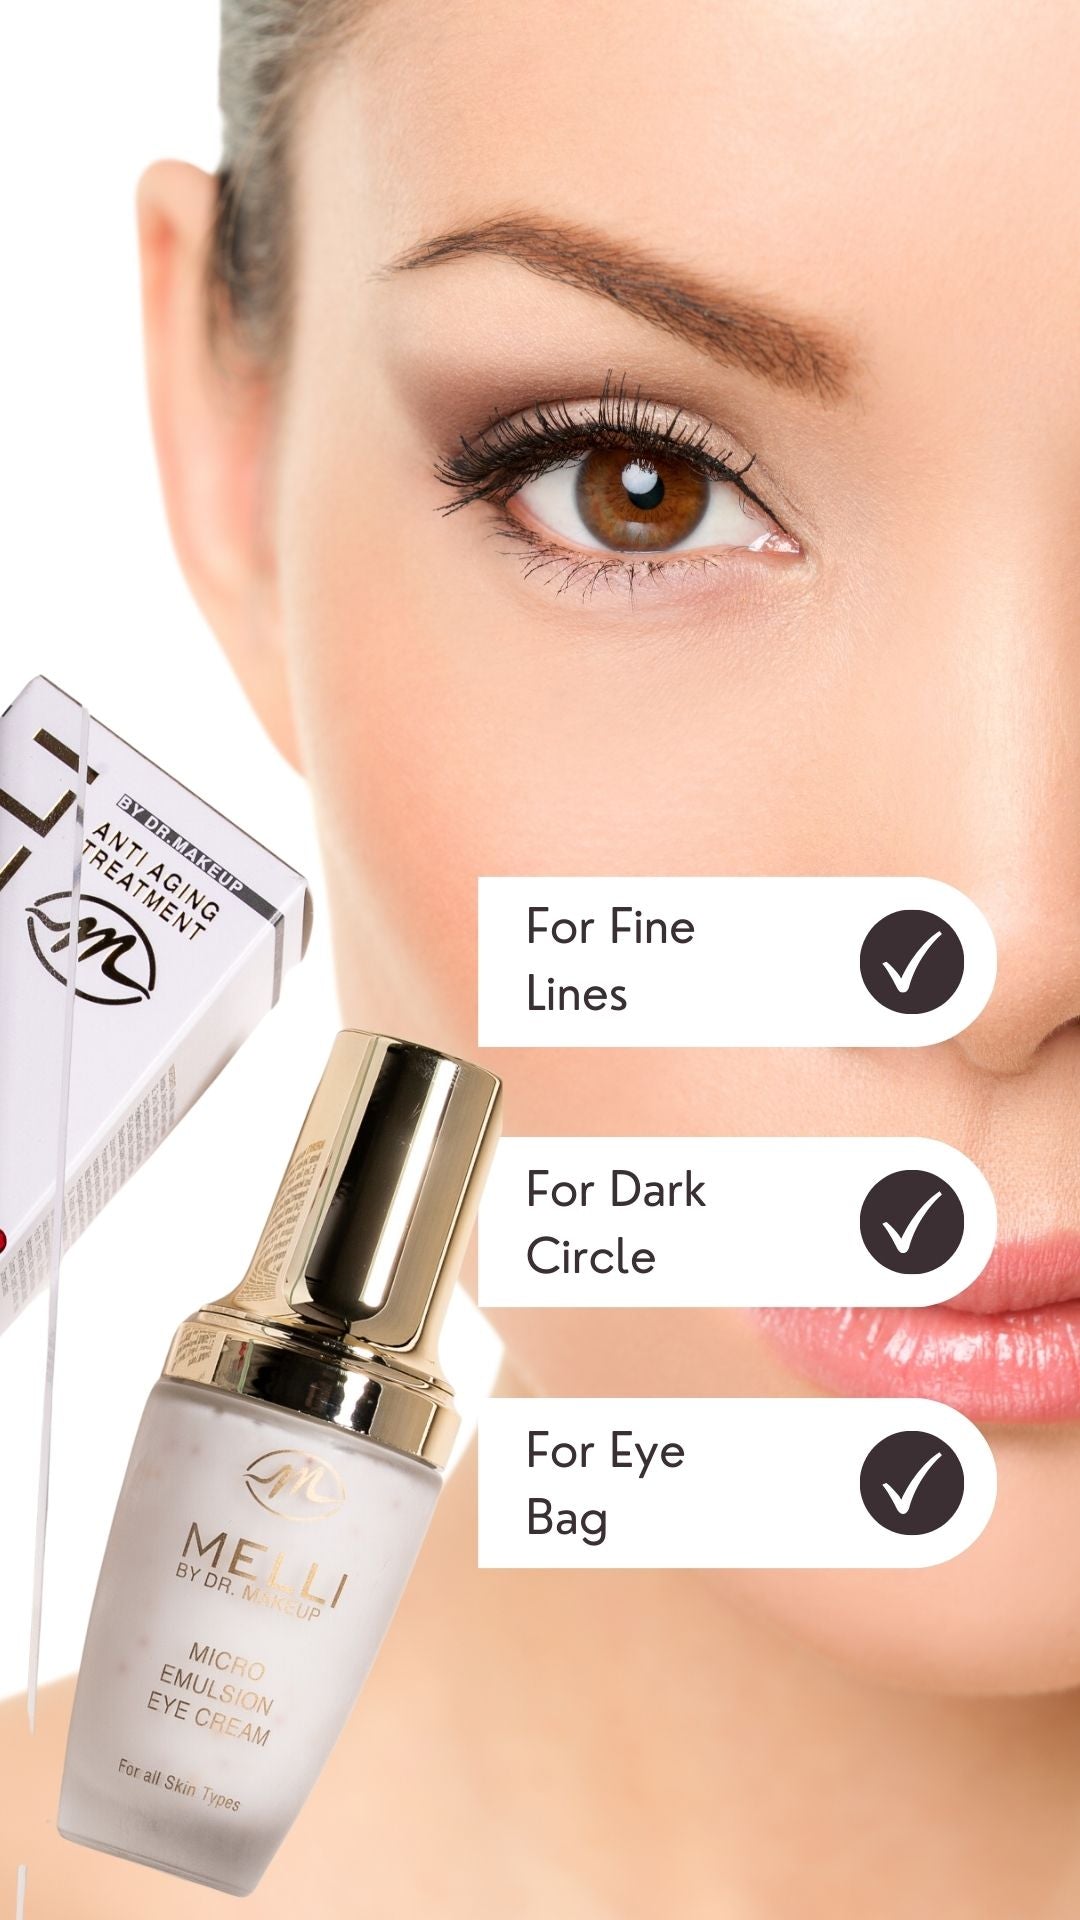 Micro Emulsion Eye Cream / 30 ml